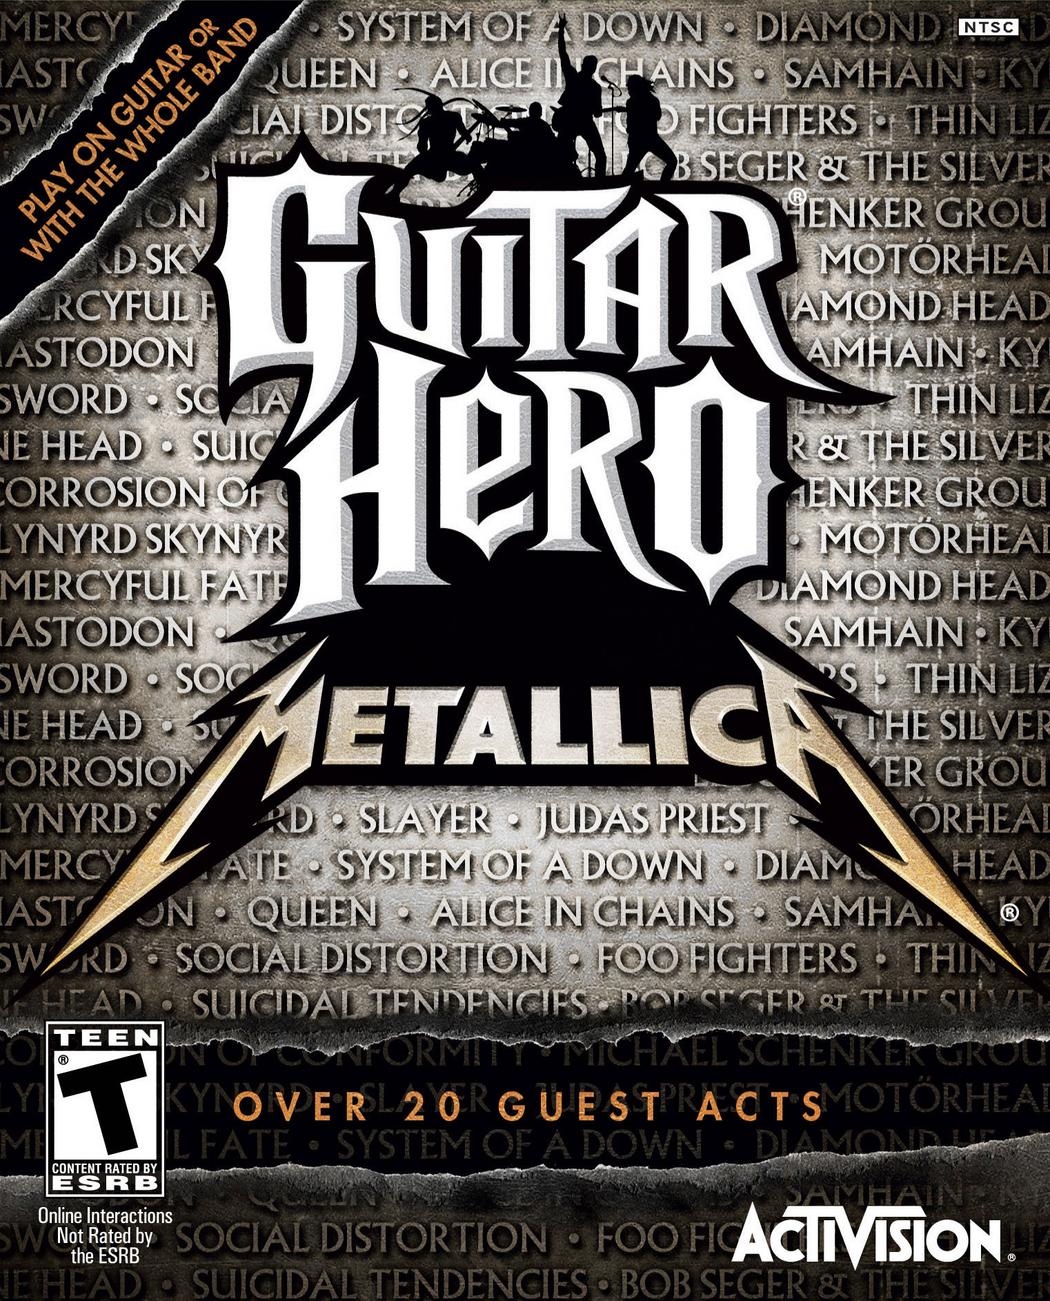 Metallica Discography: Guitar Hero: Metallica